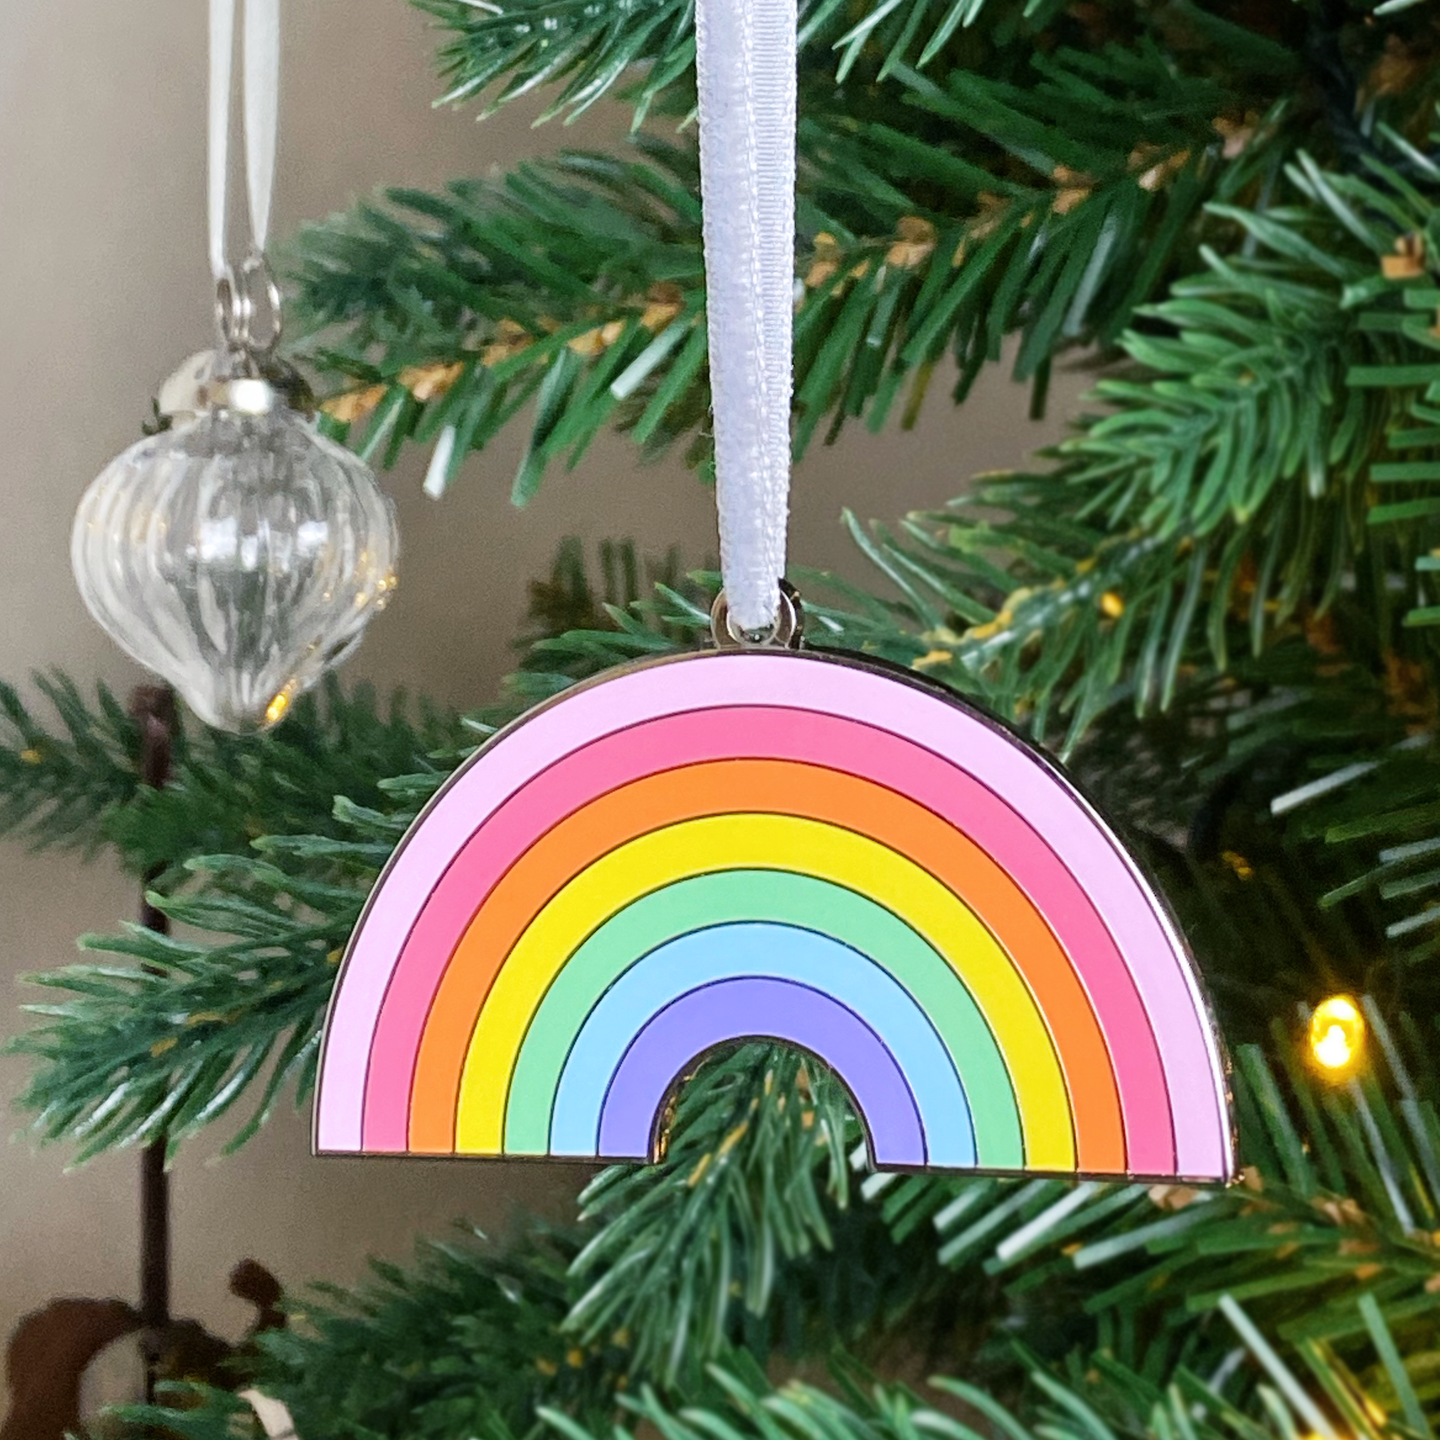 Pastel Rainbow Enamel Christmas Tree Decoration